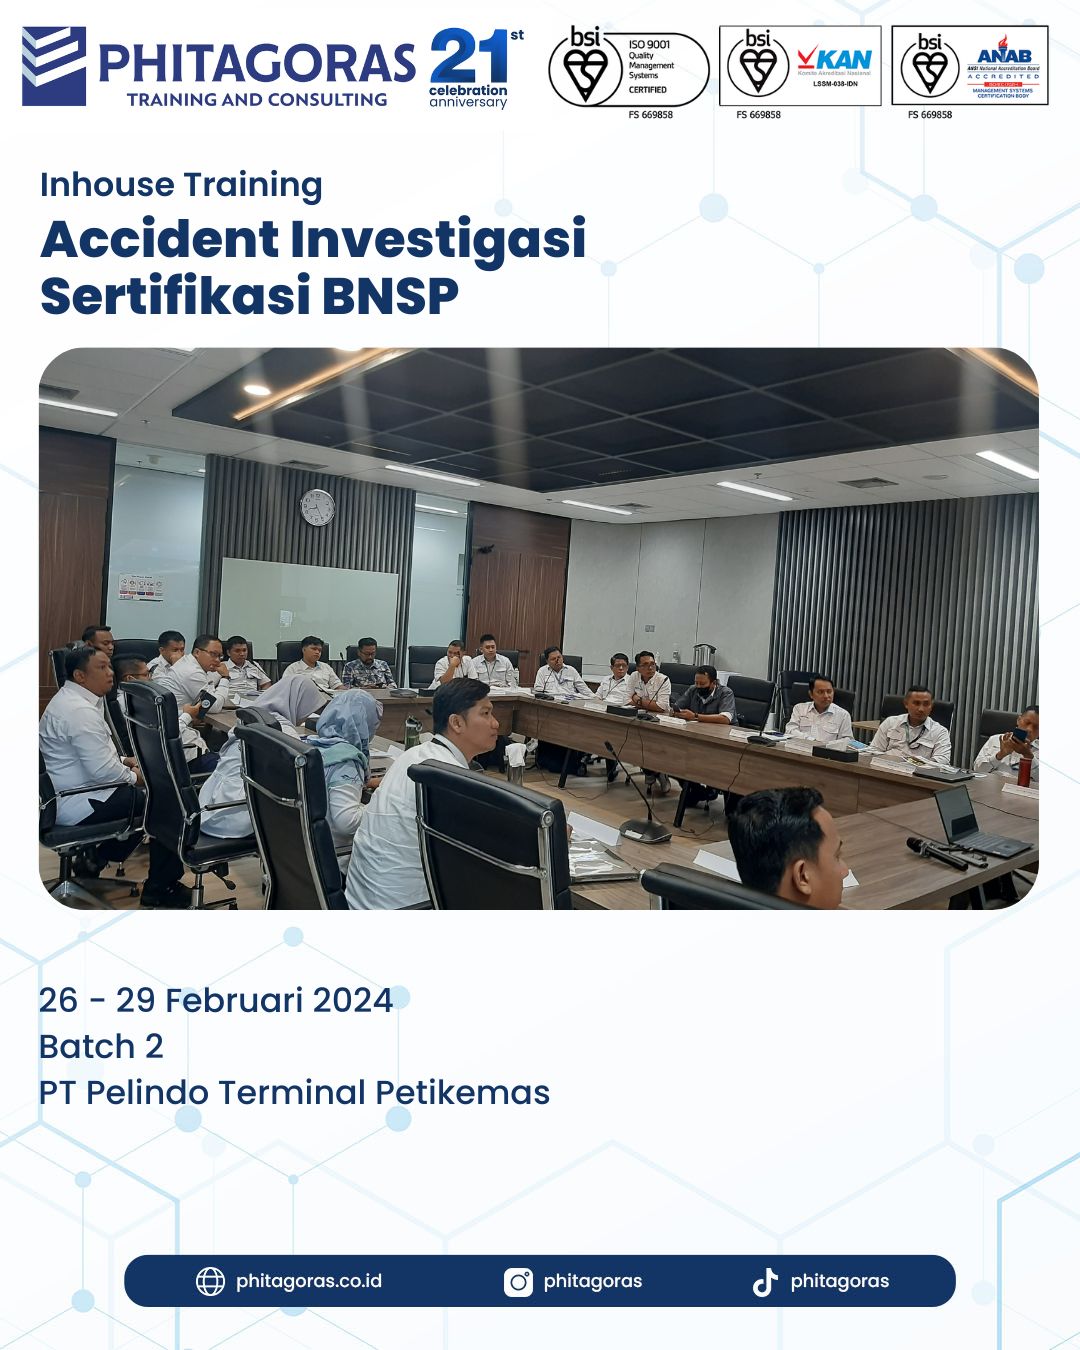 Inhouse Training Accident Investigation Sertifikasi BNSP - PT Pelindo Terminal Petikemas Batch 2